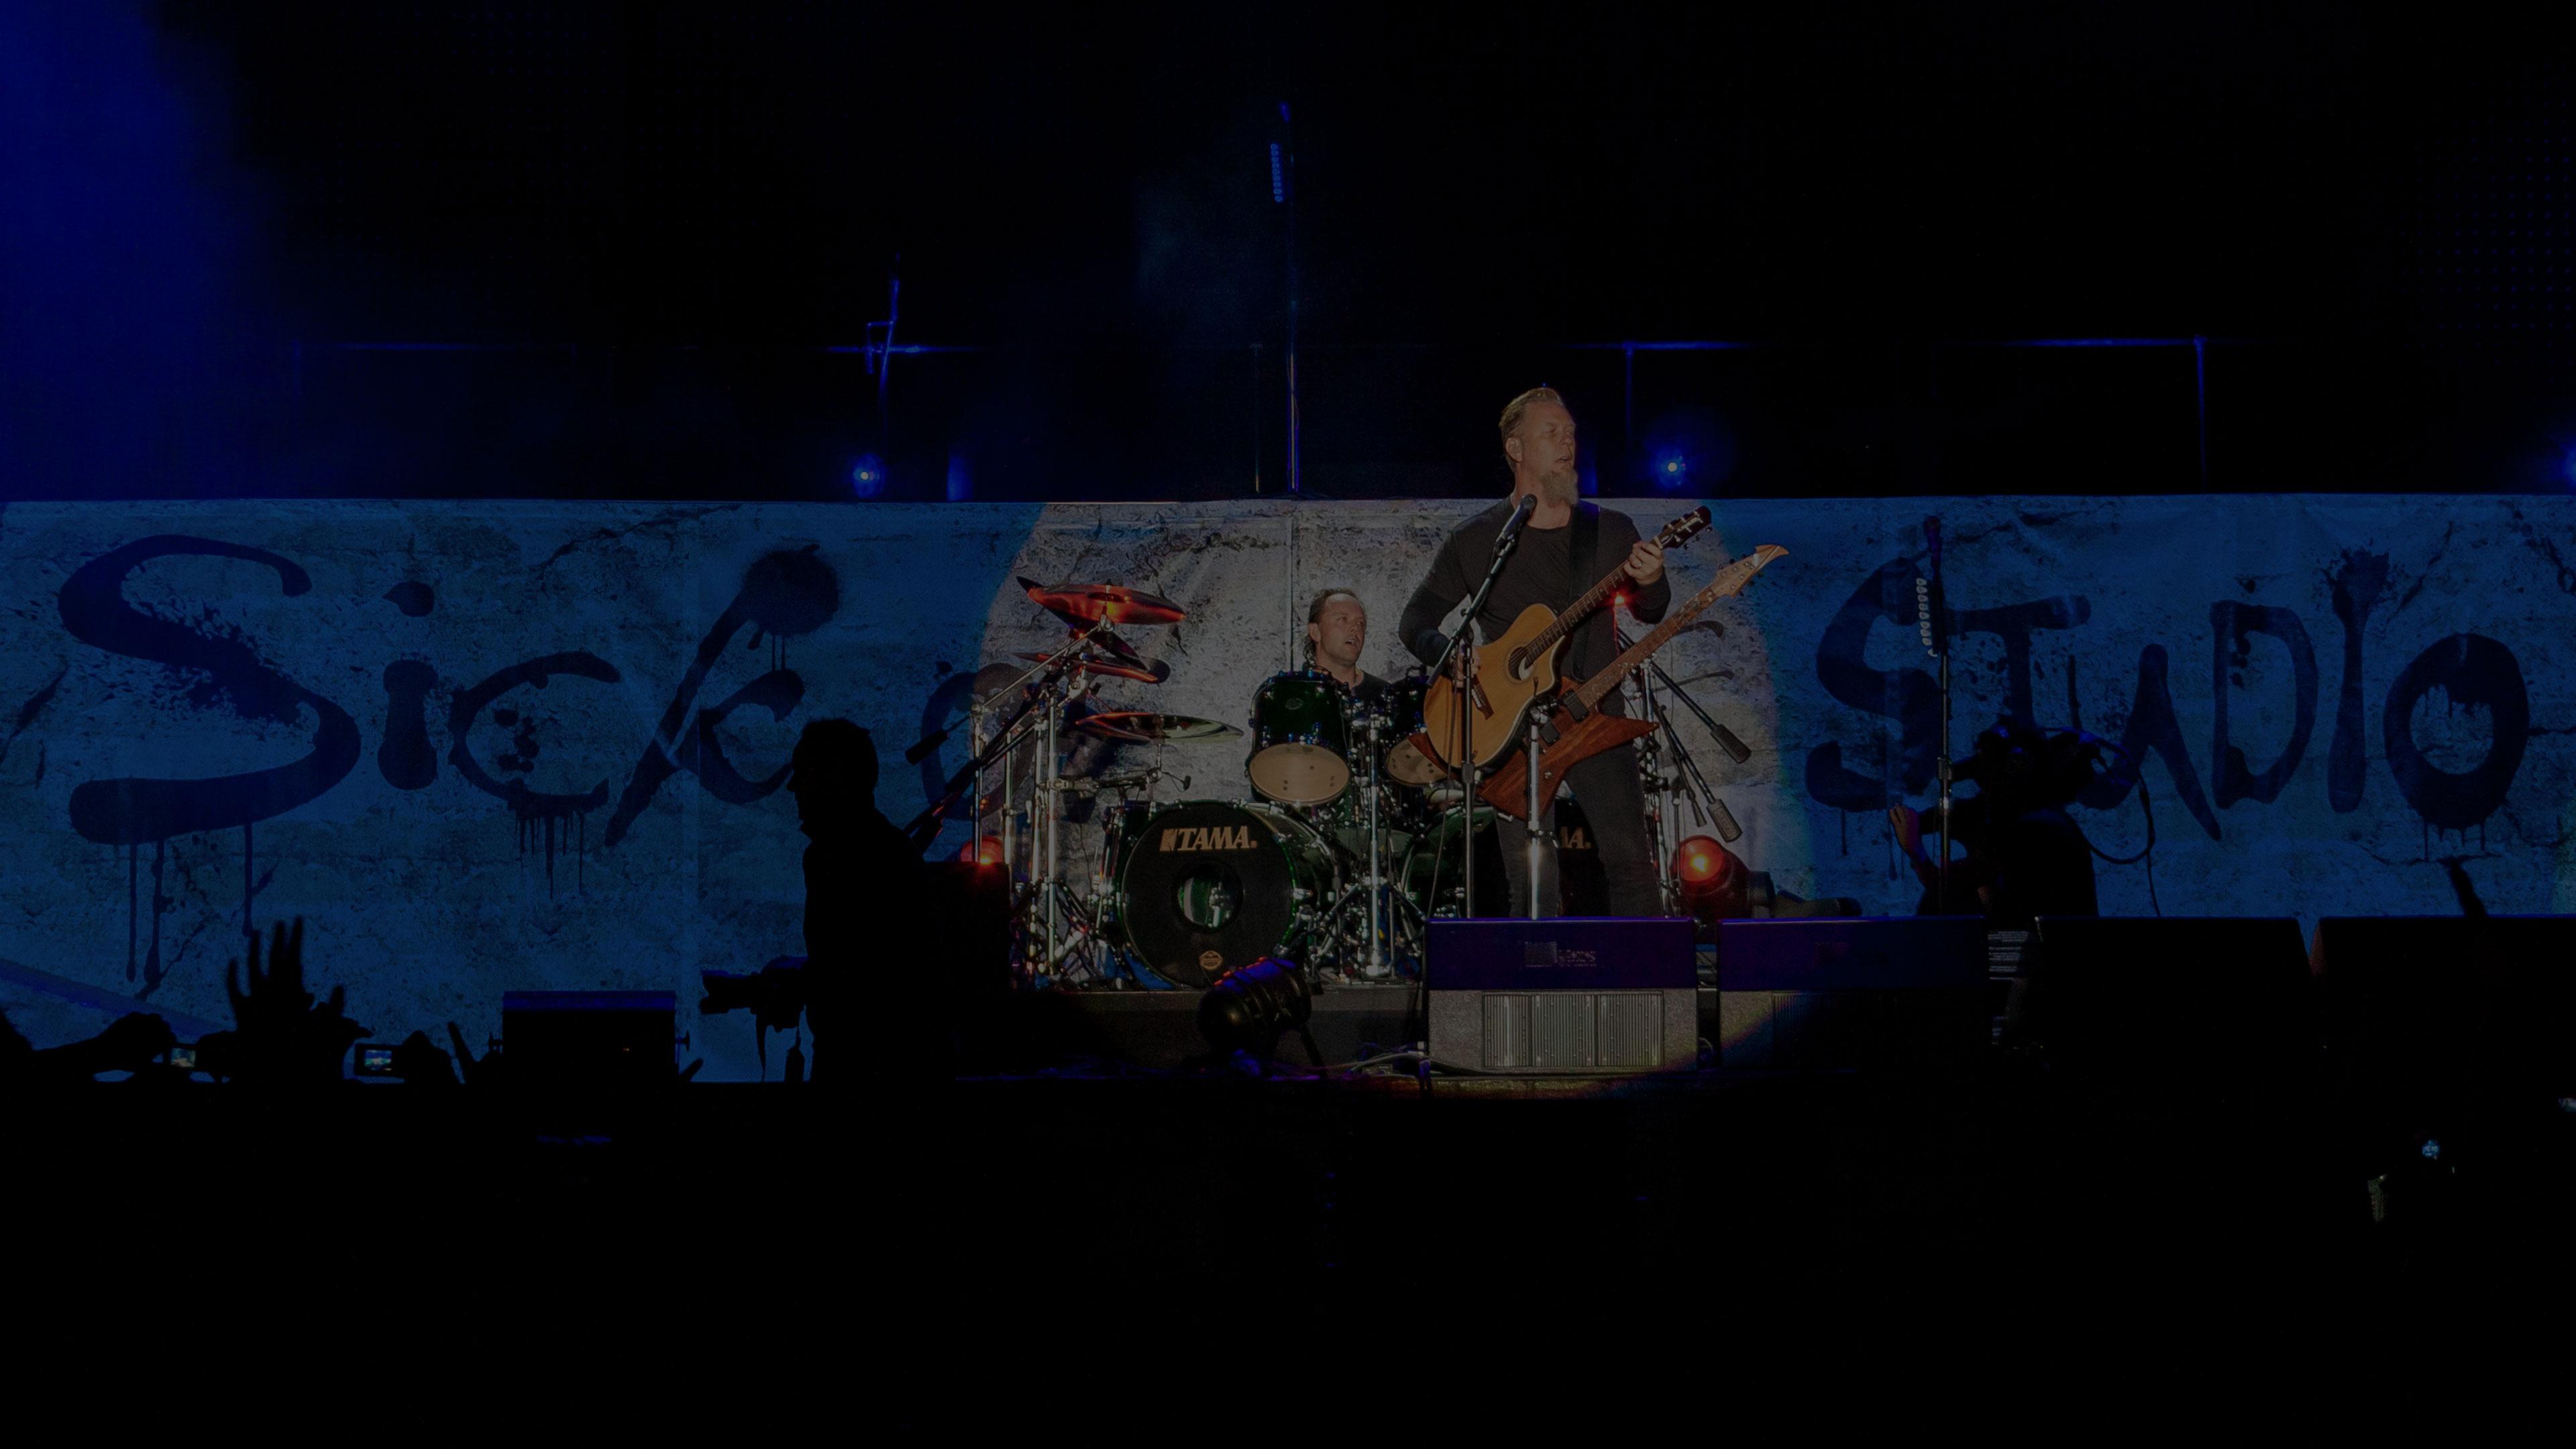 Metallica at Super Bock Super Rock at Parque do Tejo in Lisbon, Portugal on June 28, 2007